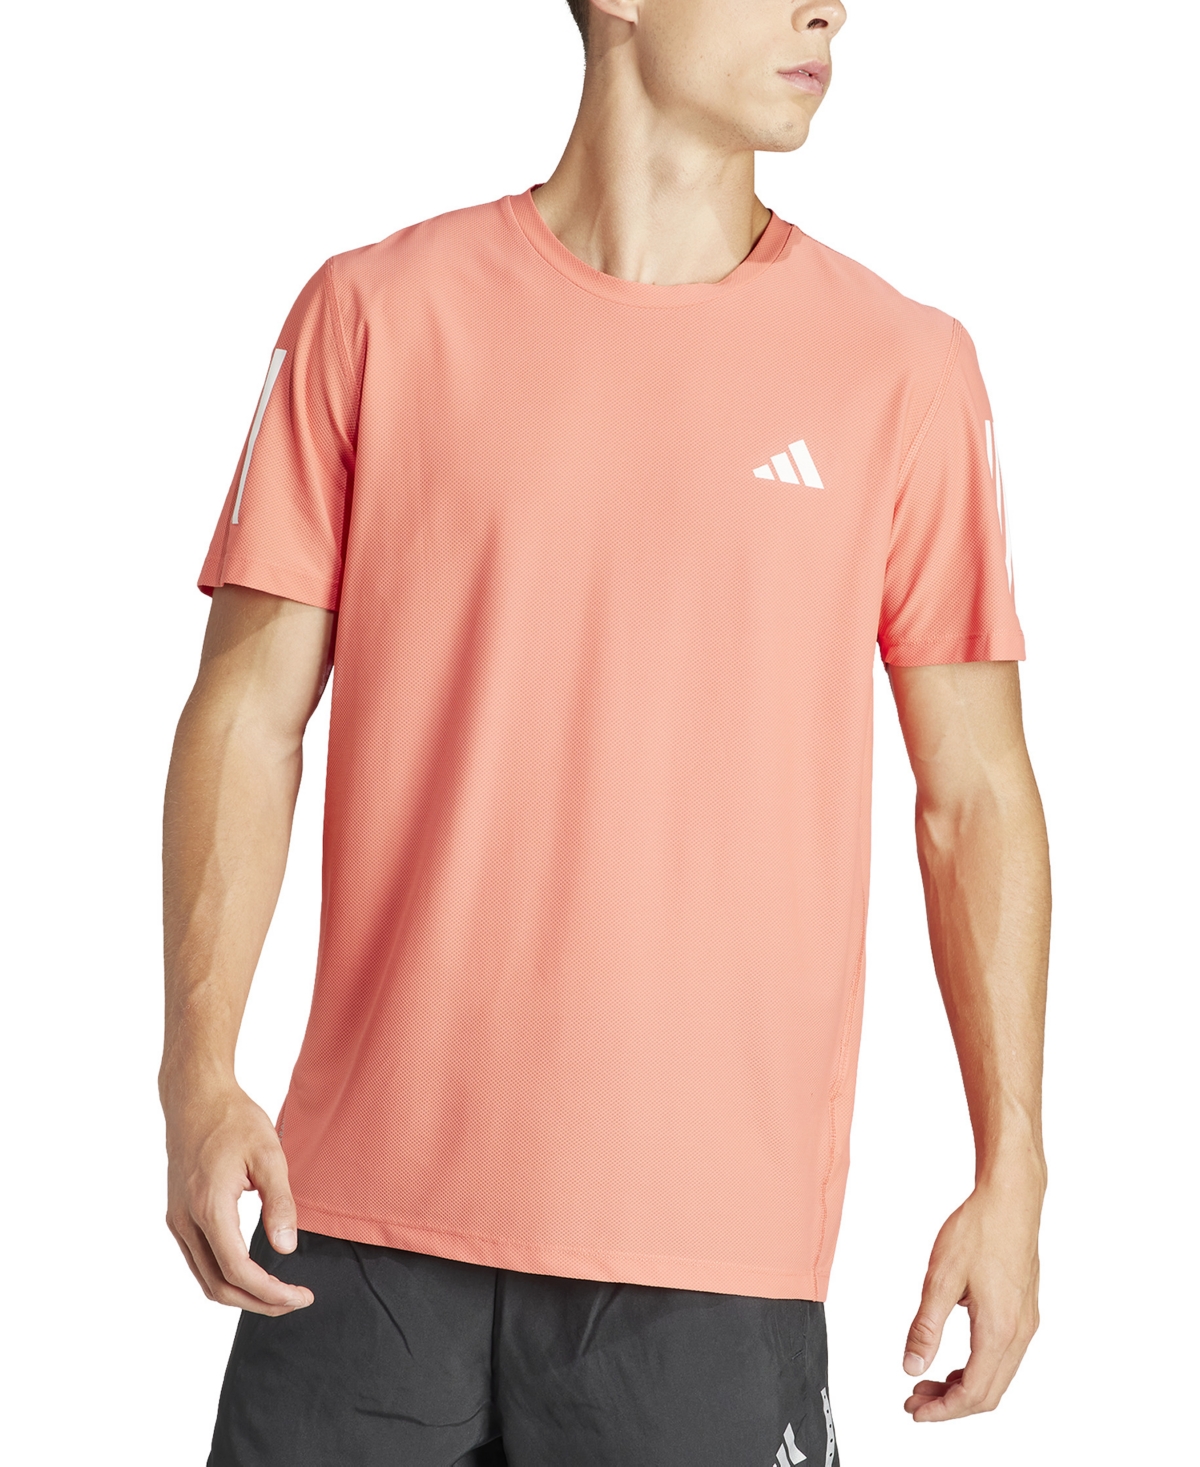 Adidas Originals Men's Running Shirt In Pink